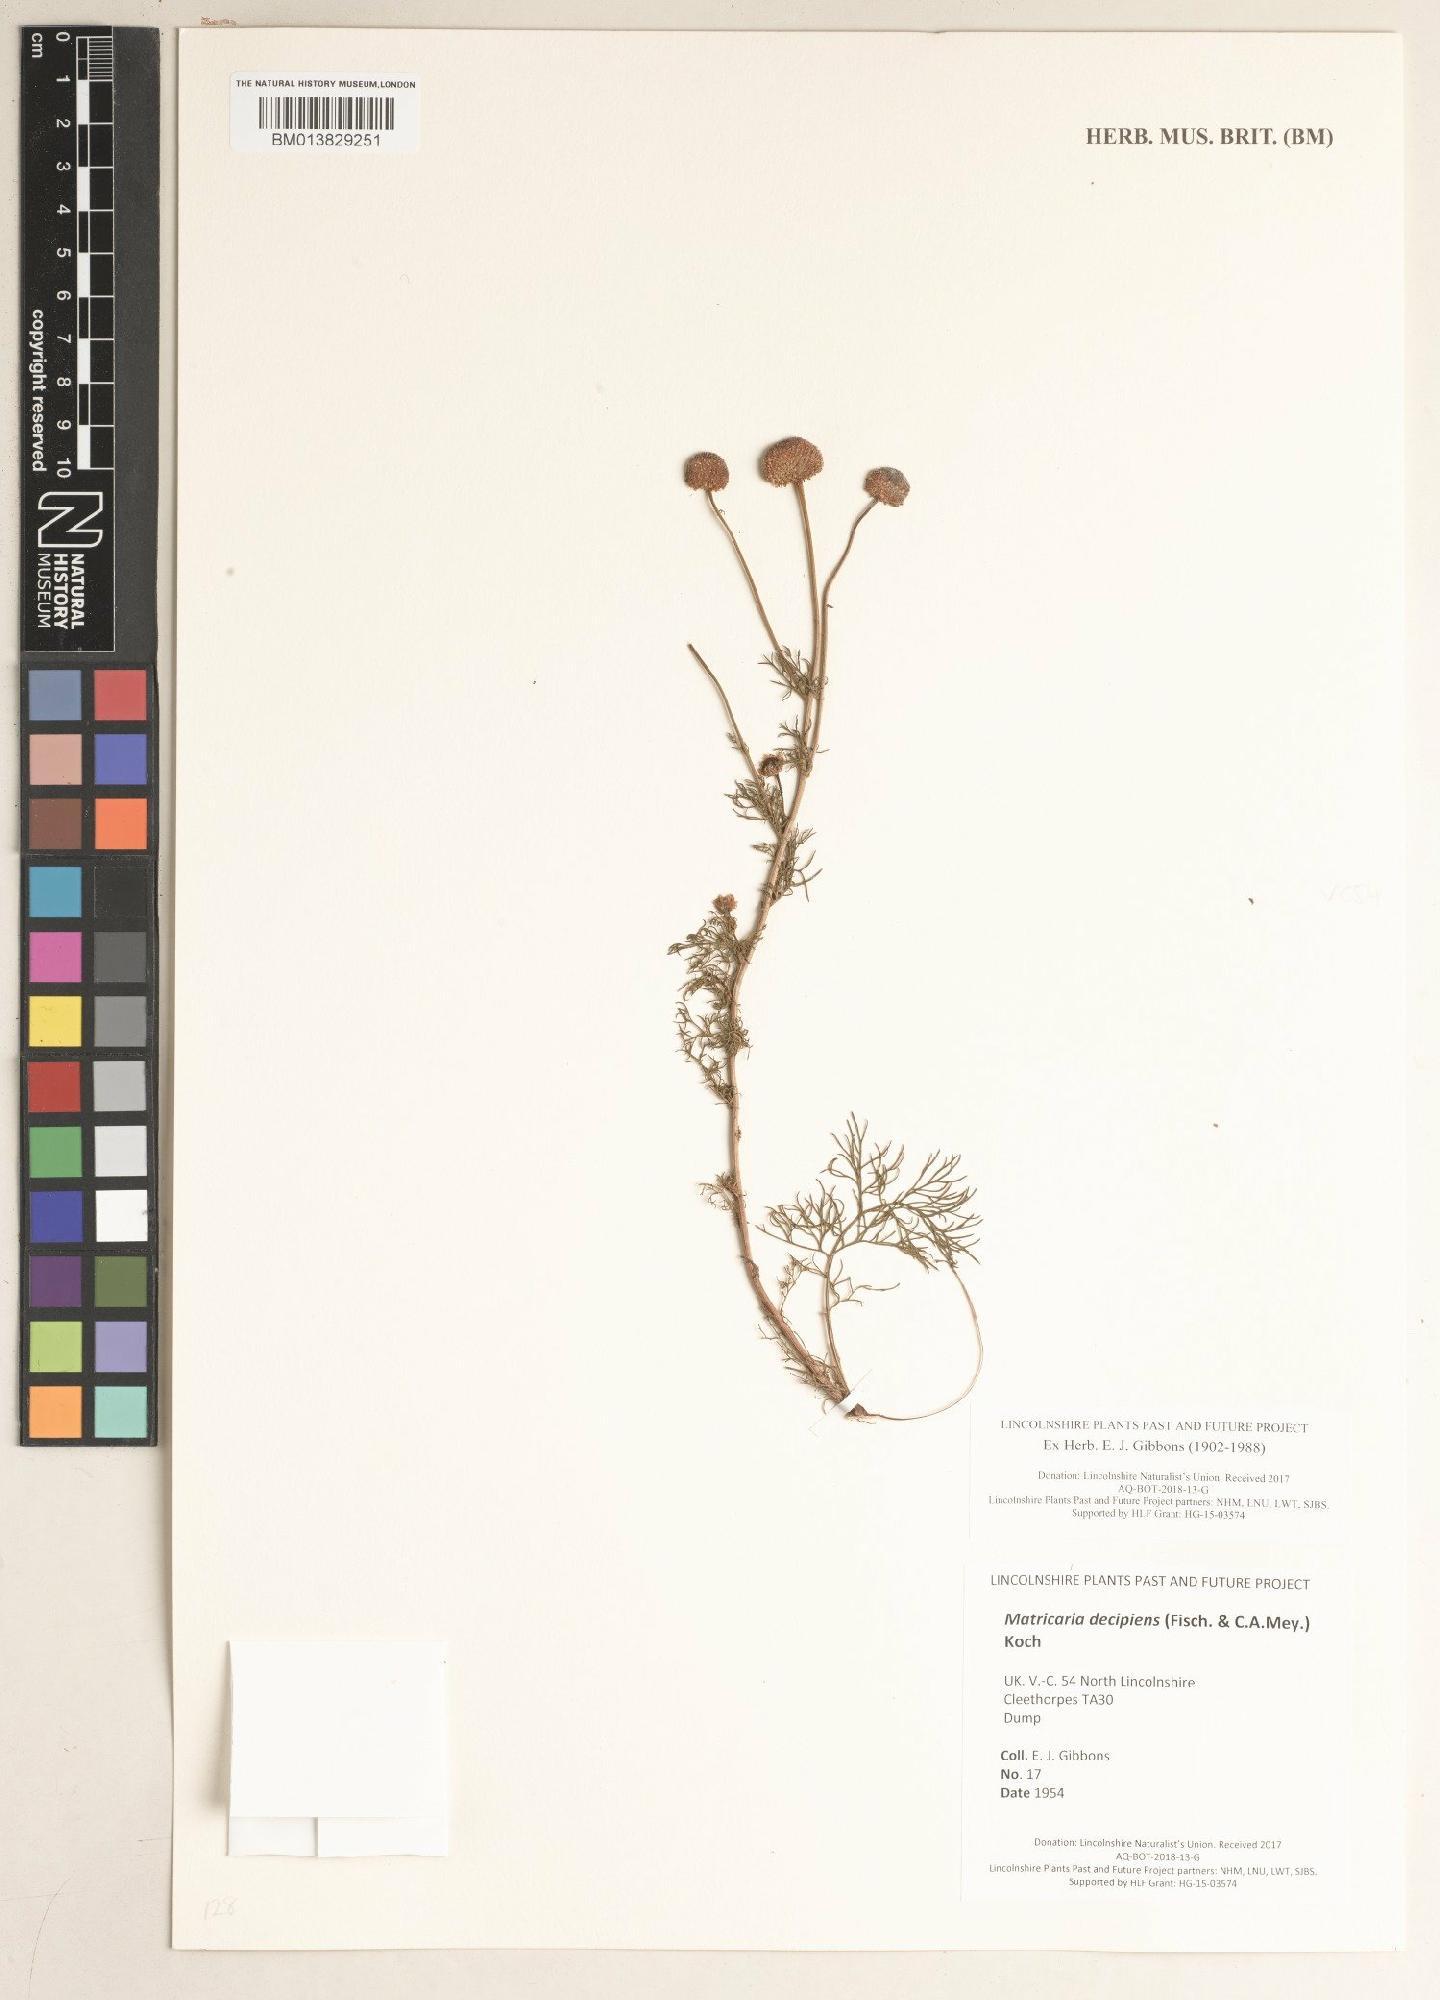 To NHMUK collection (Matricaria decipiens (Fisch. & C.A.Mey.) Koch; NHMUK:ecatalogue:9474940)